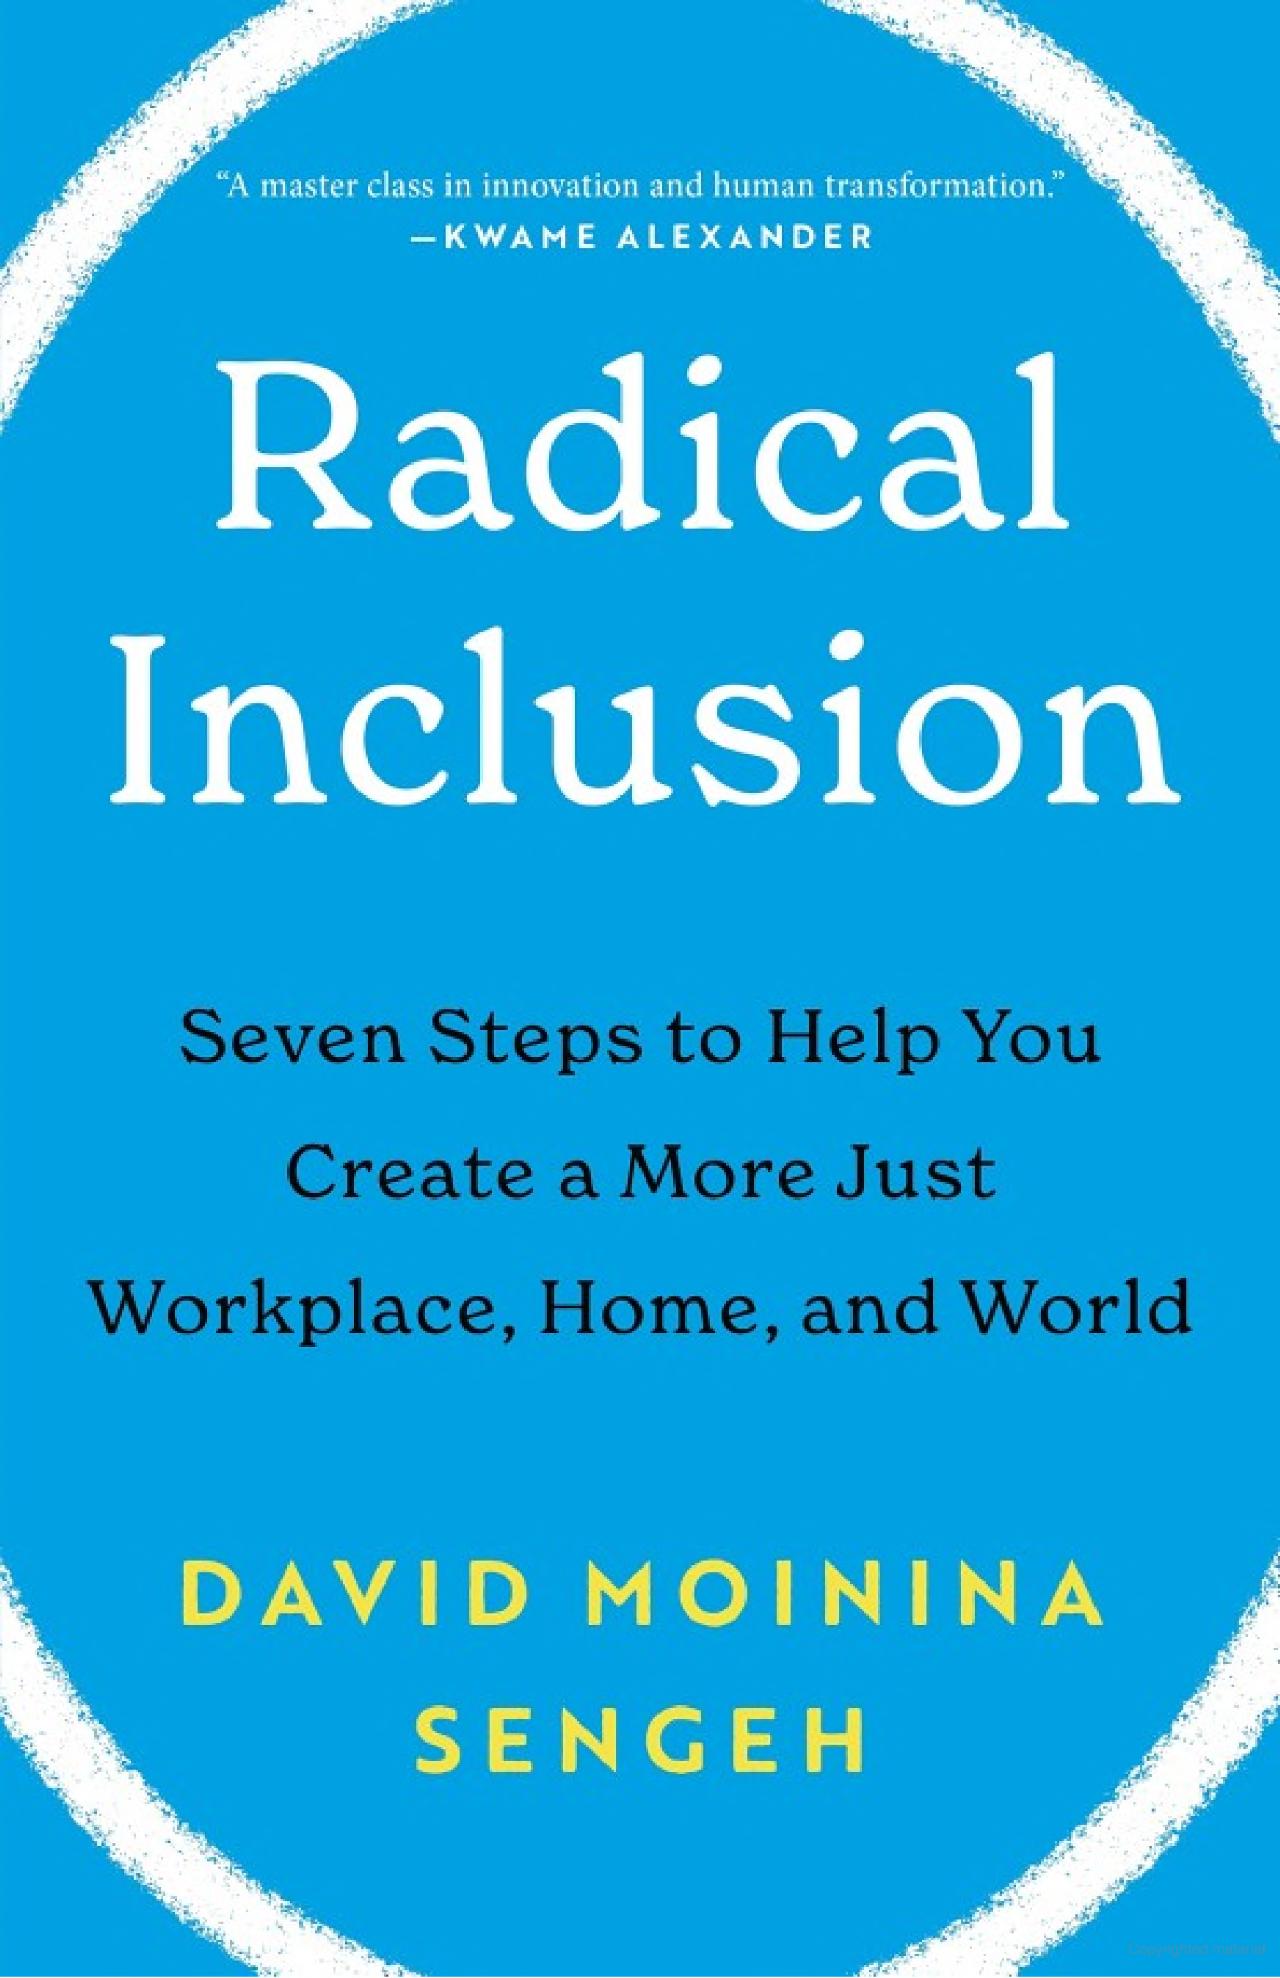 Radical Inclusion by David Sengeh